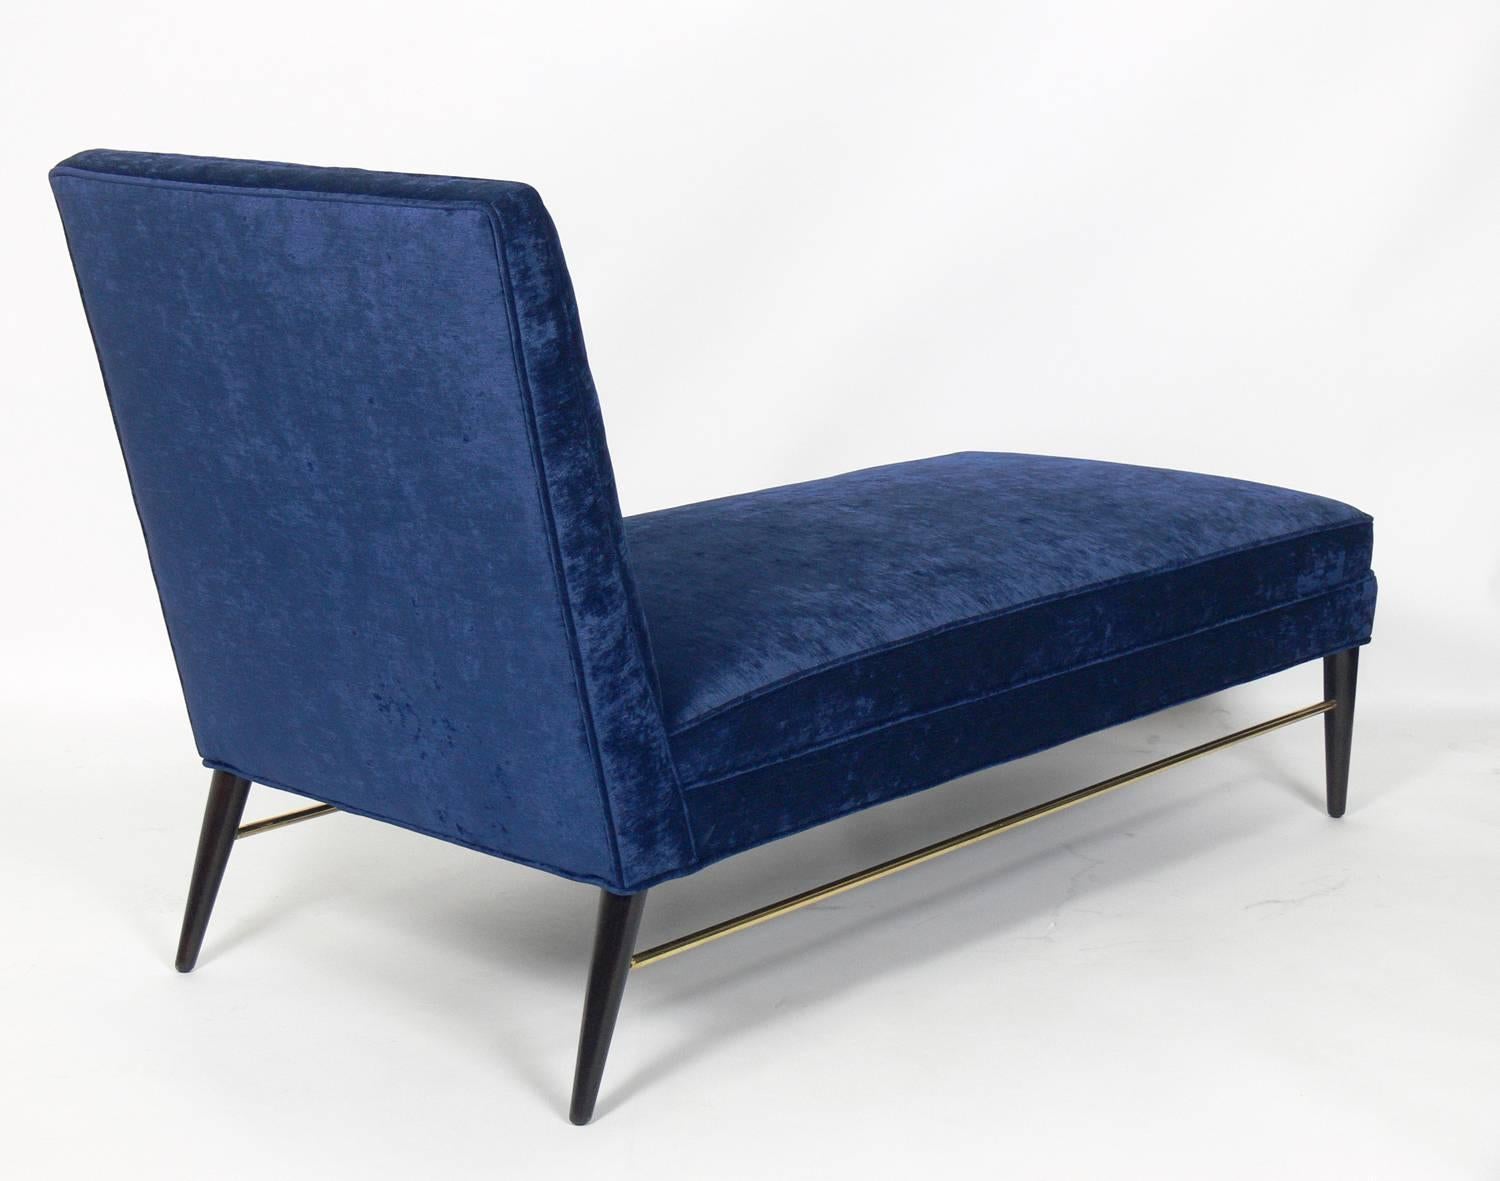 Mid-Century Modern Modern Chaise Lounge Designed by Paul McCobb